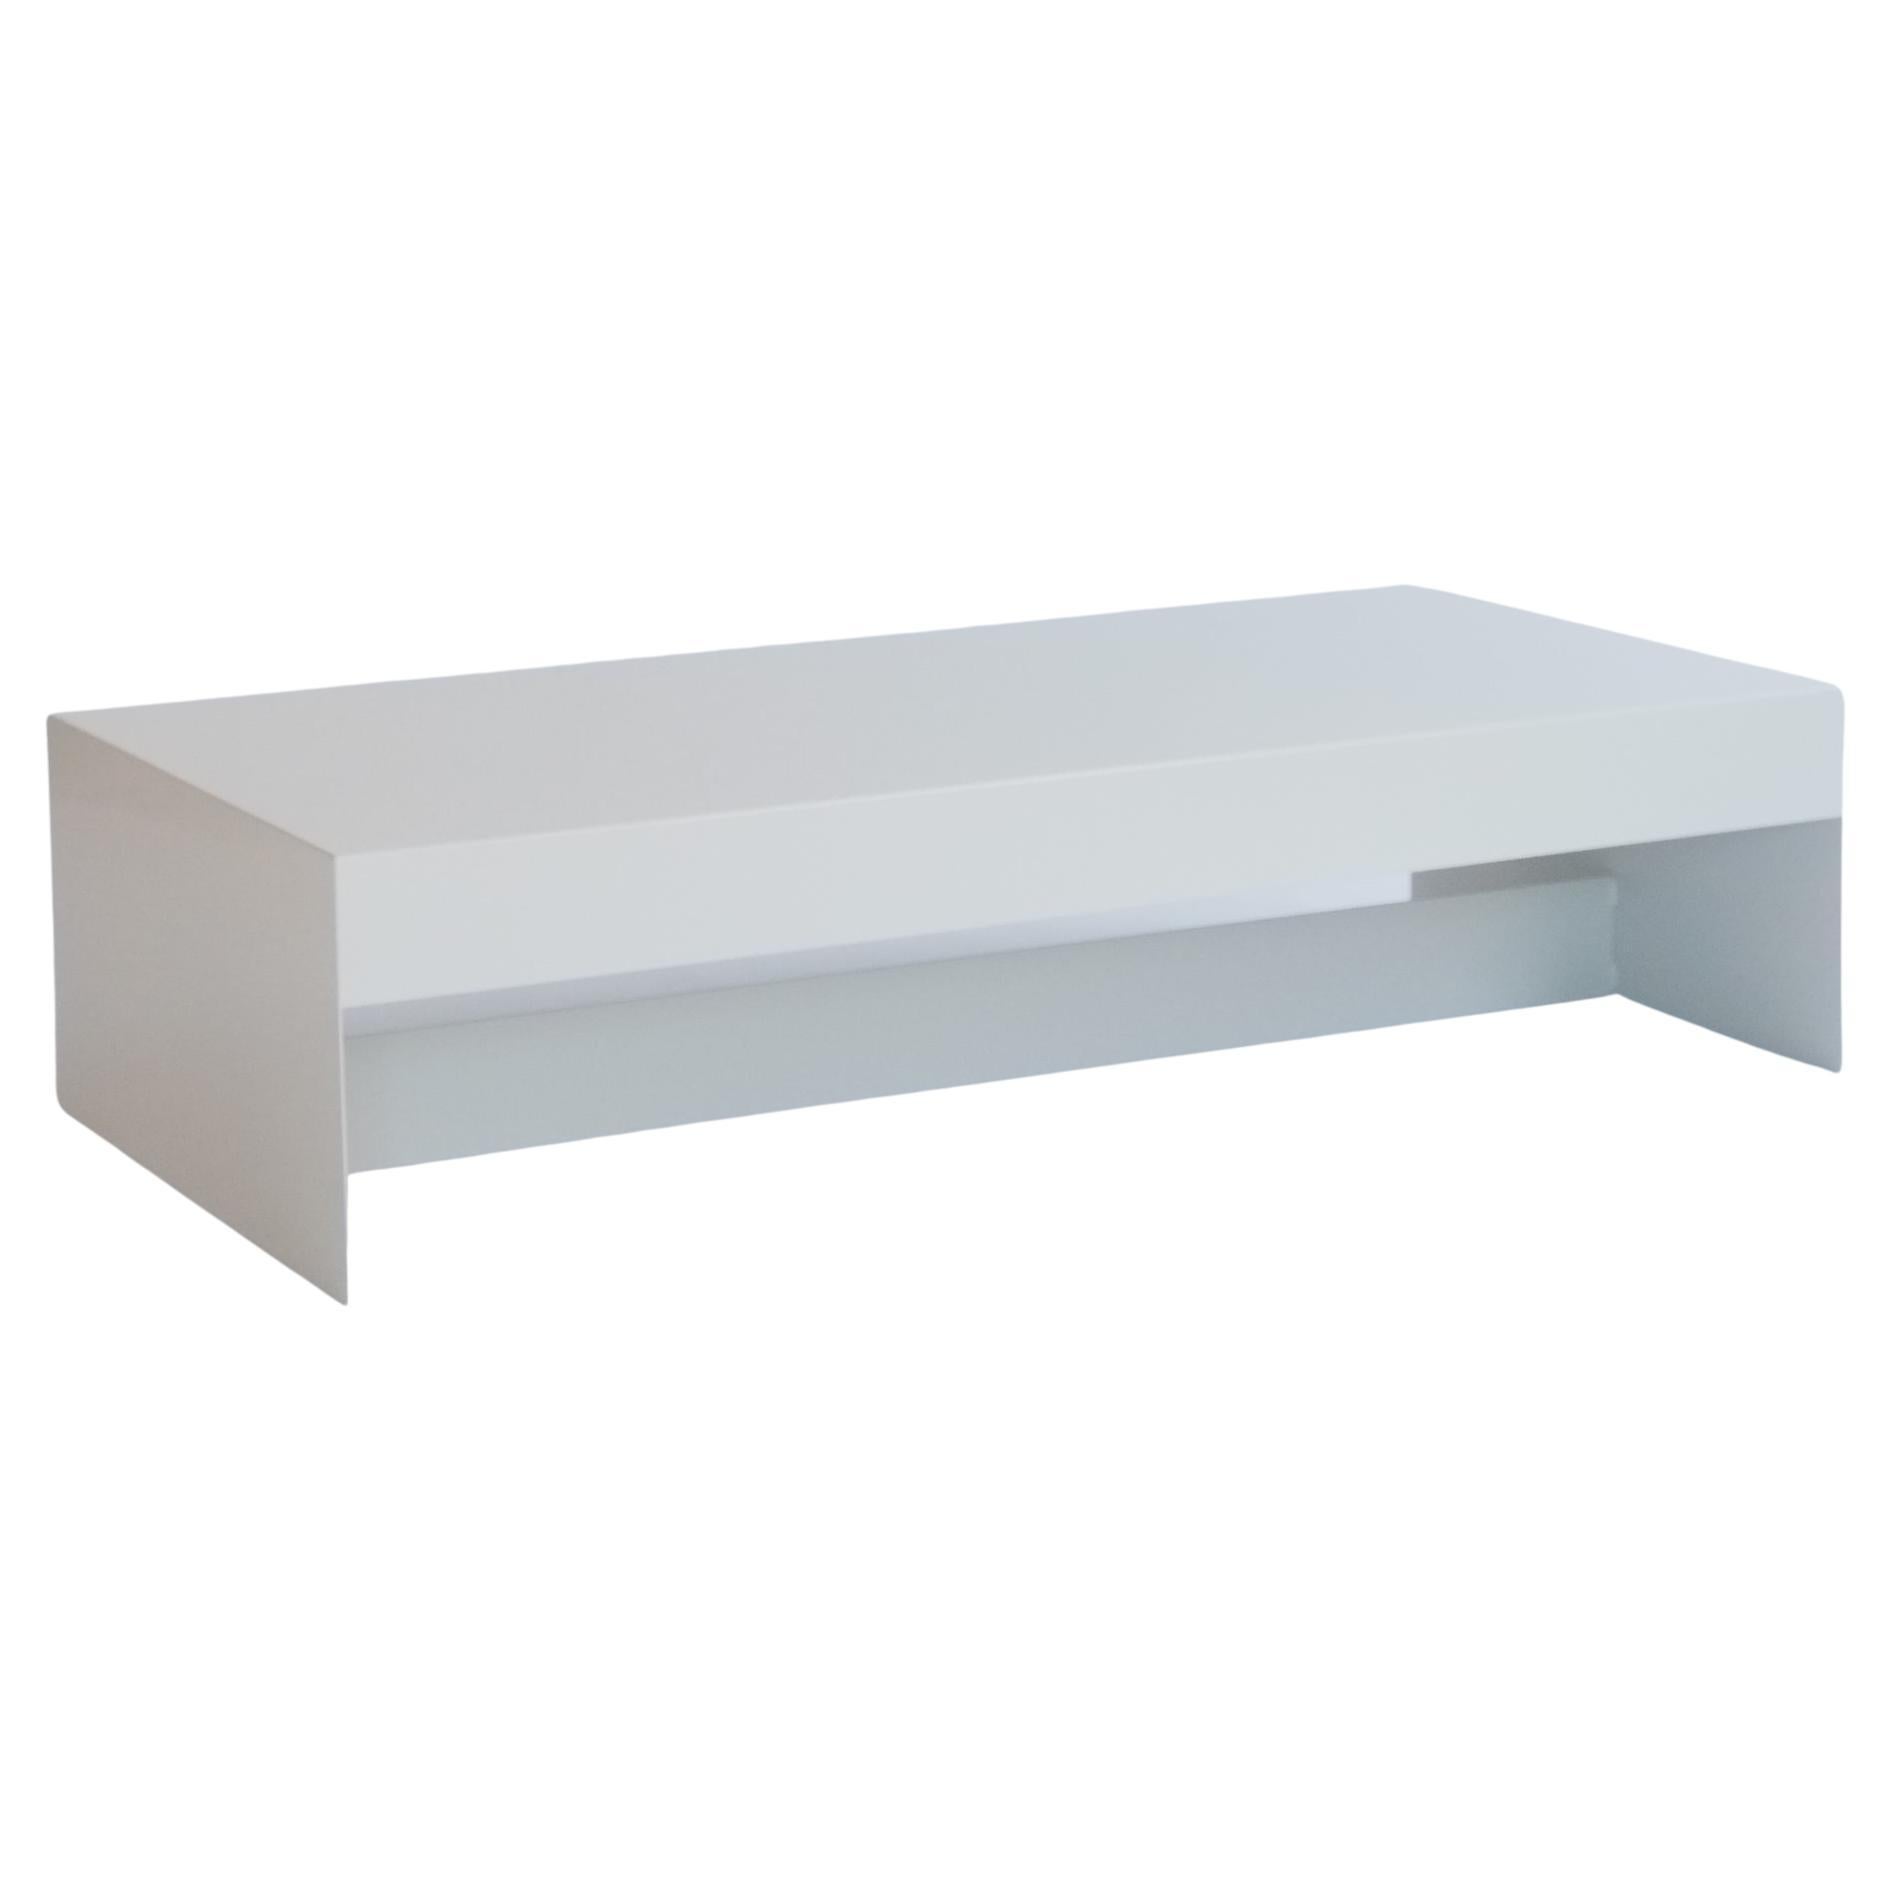 Paper White, Single Form Bespoke Aluminium Coffee Table, Customisable